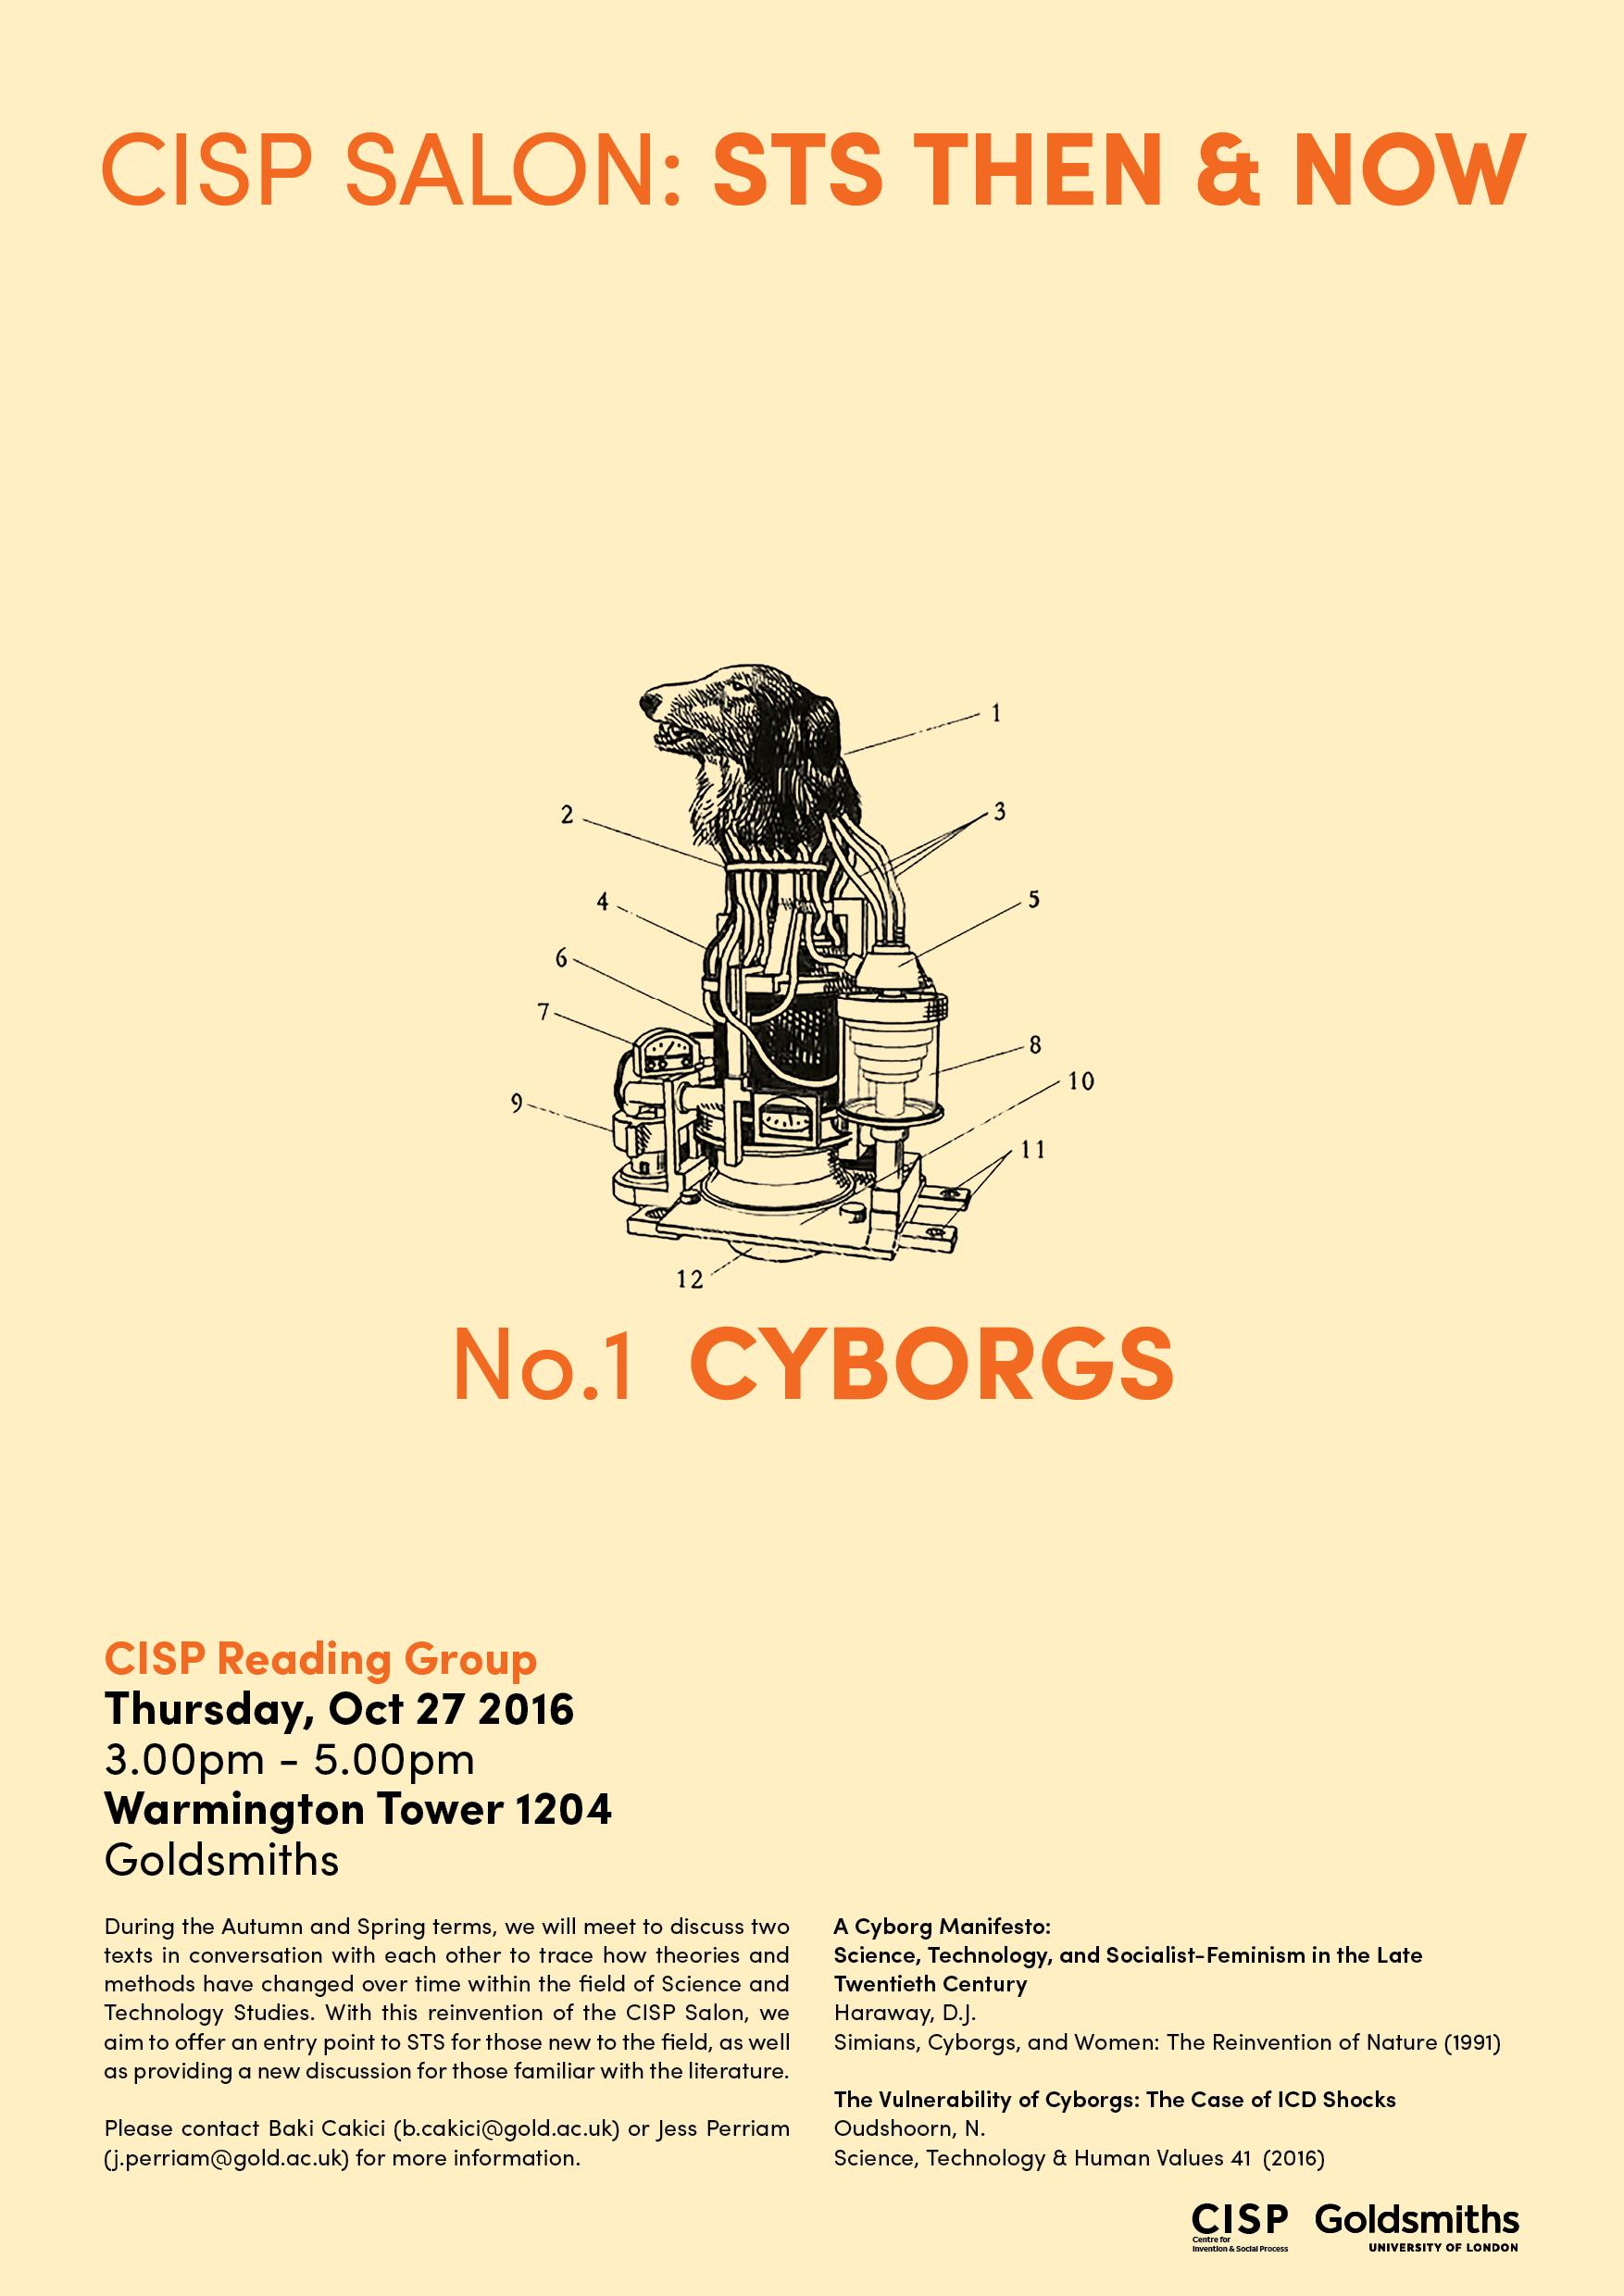 CISP Salon 2016/17: Cyborgs